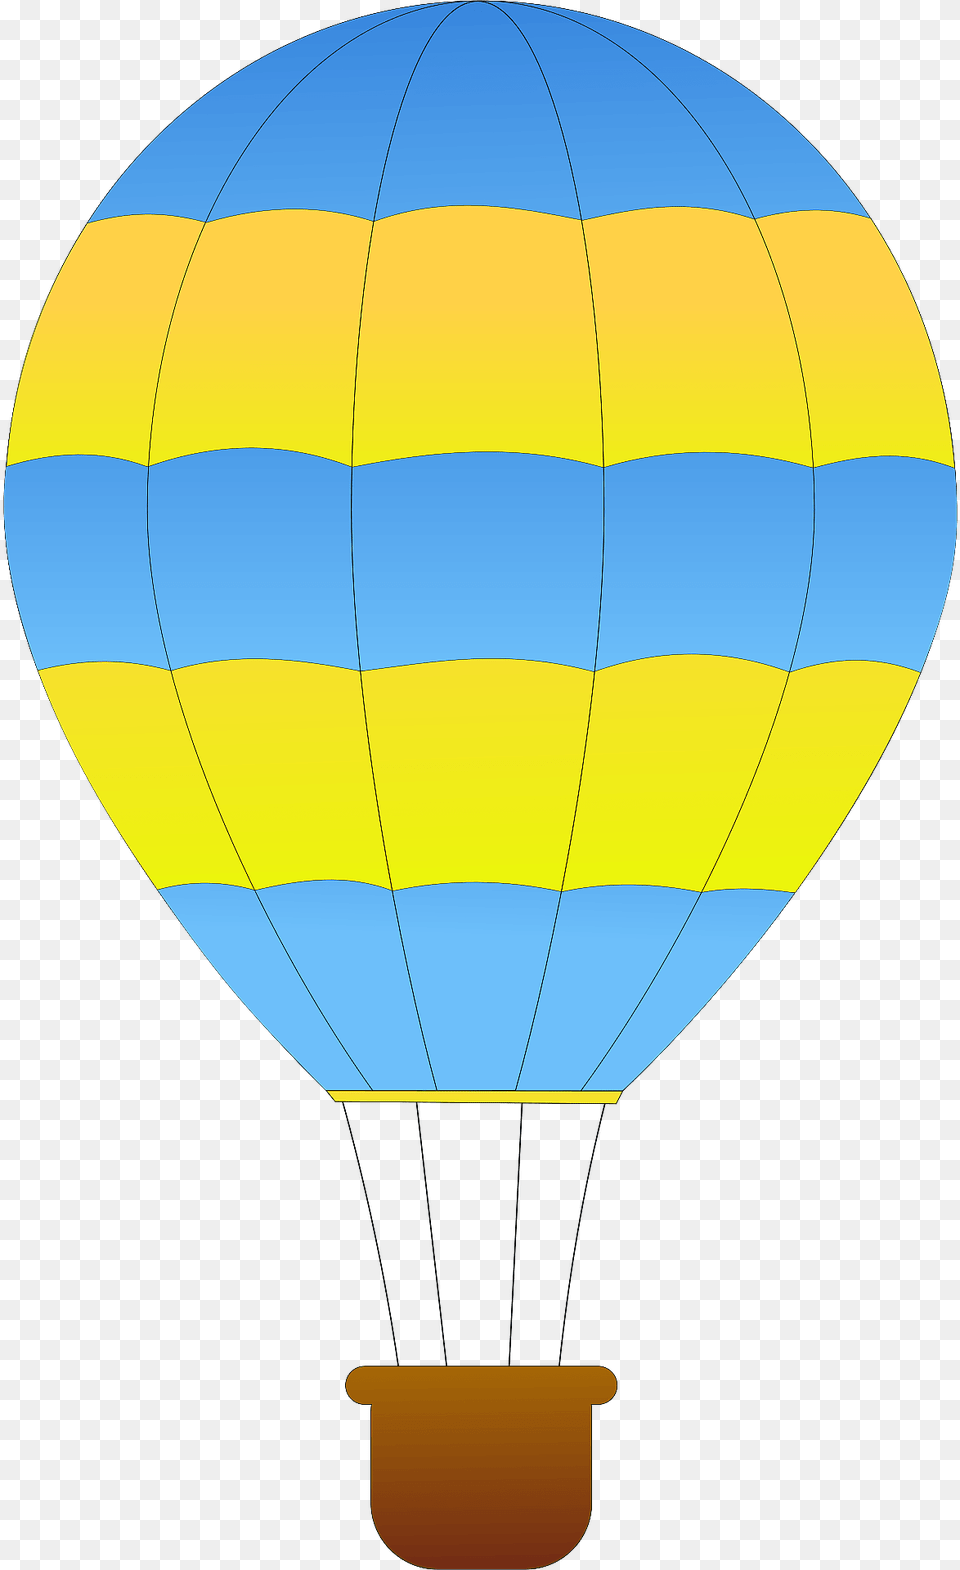 Blue And Yellow Horizontal Striped Hot Air Balloon Clipart, Aircraft, Hot Air Balloon, Transportation, Vehicle Free Transparent Png